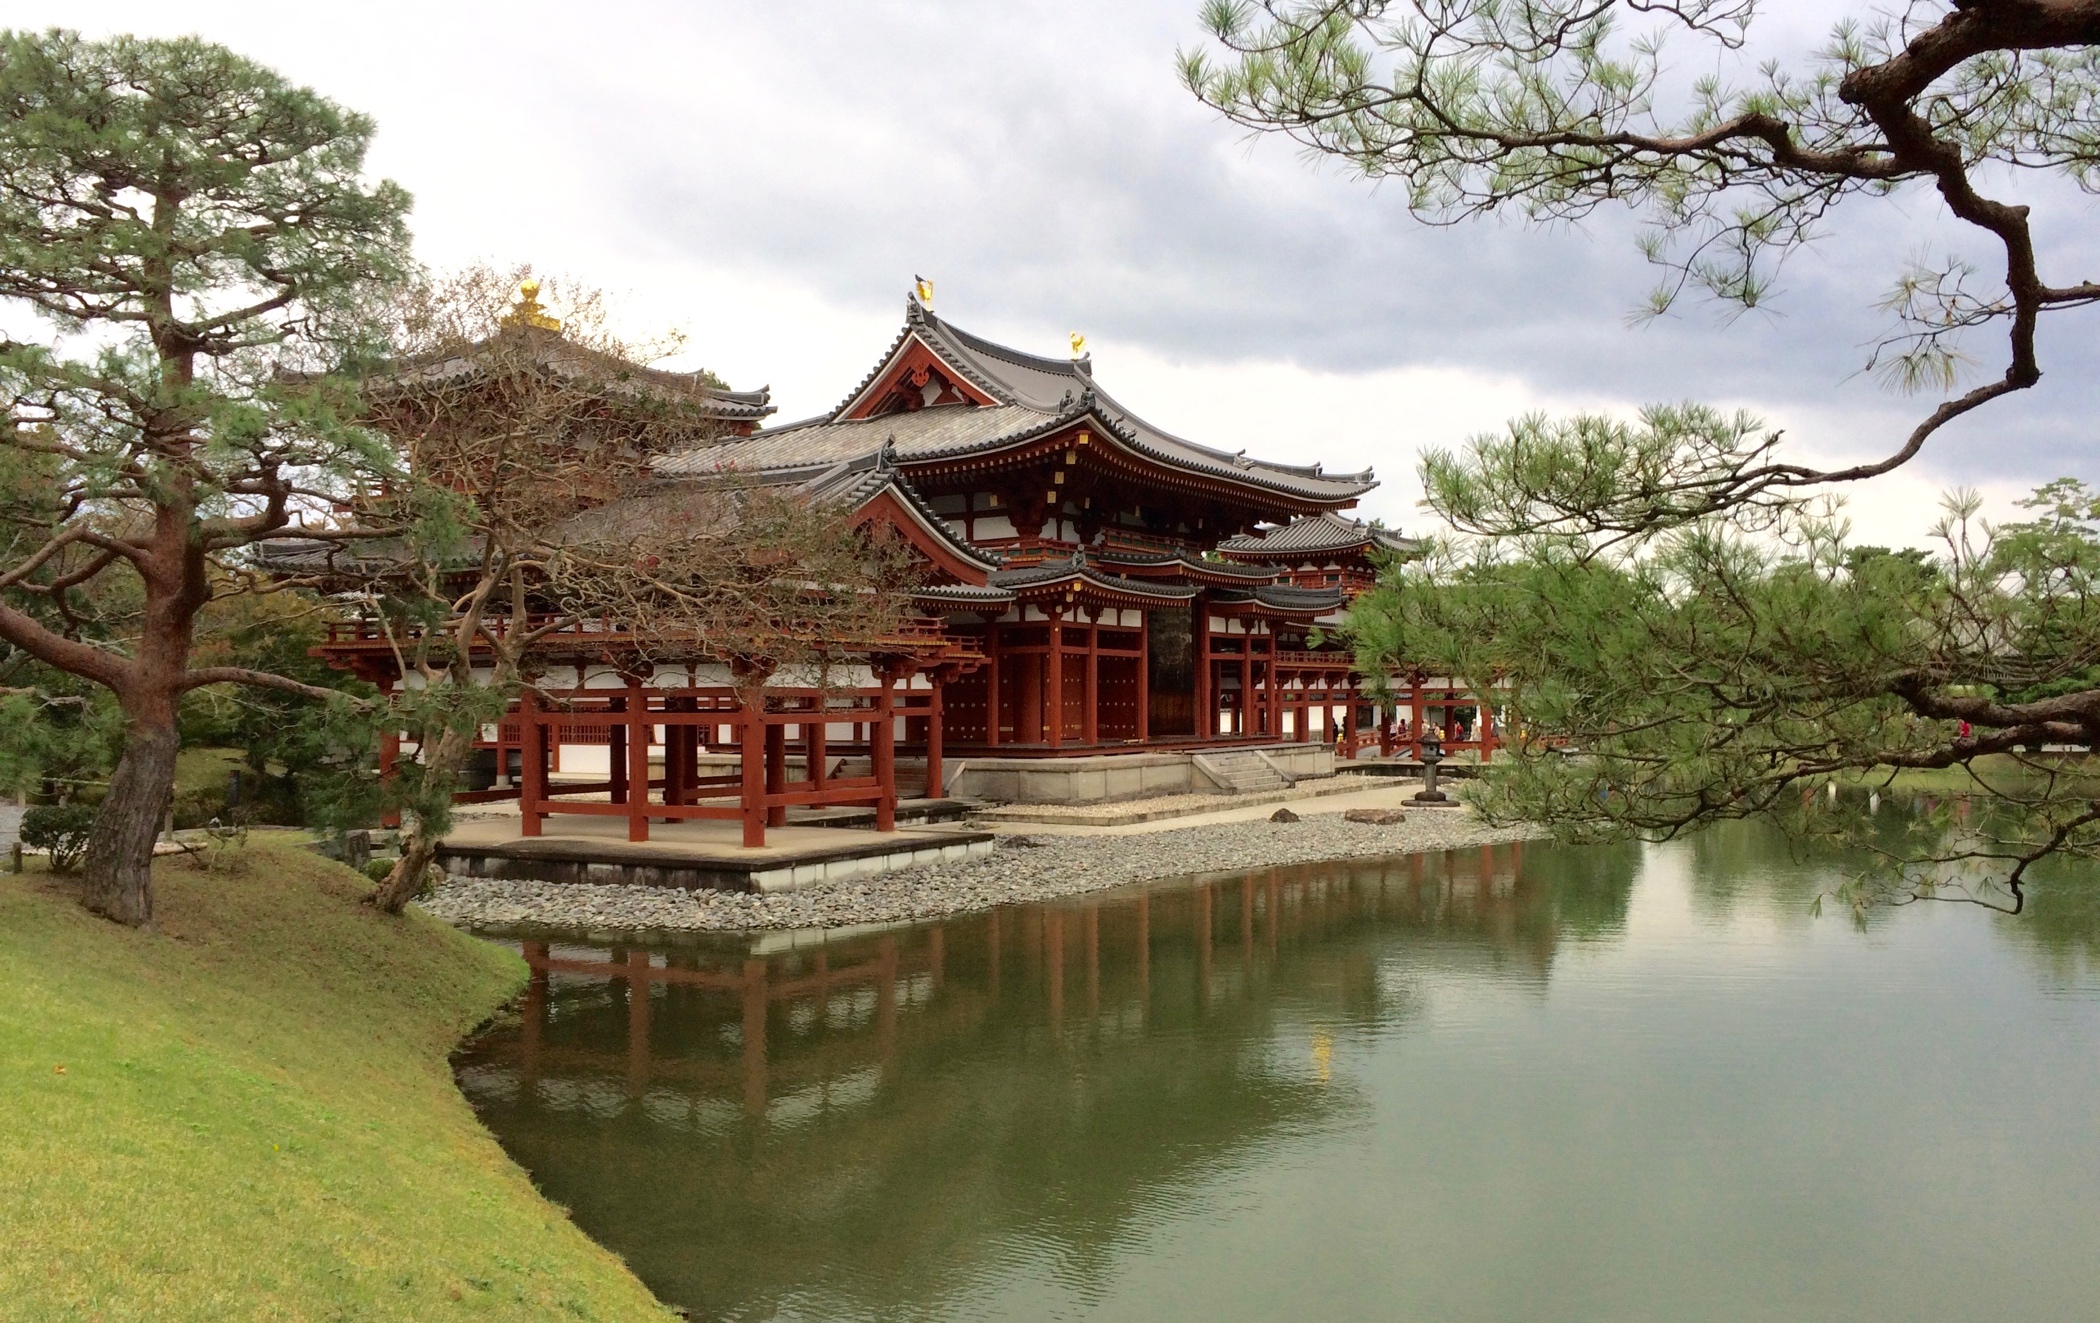 The Phoenix Temple in Uji